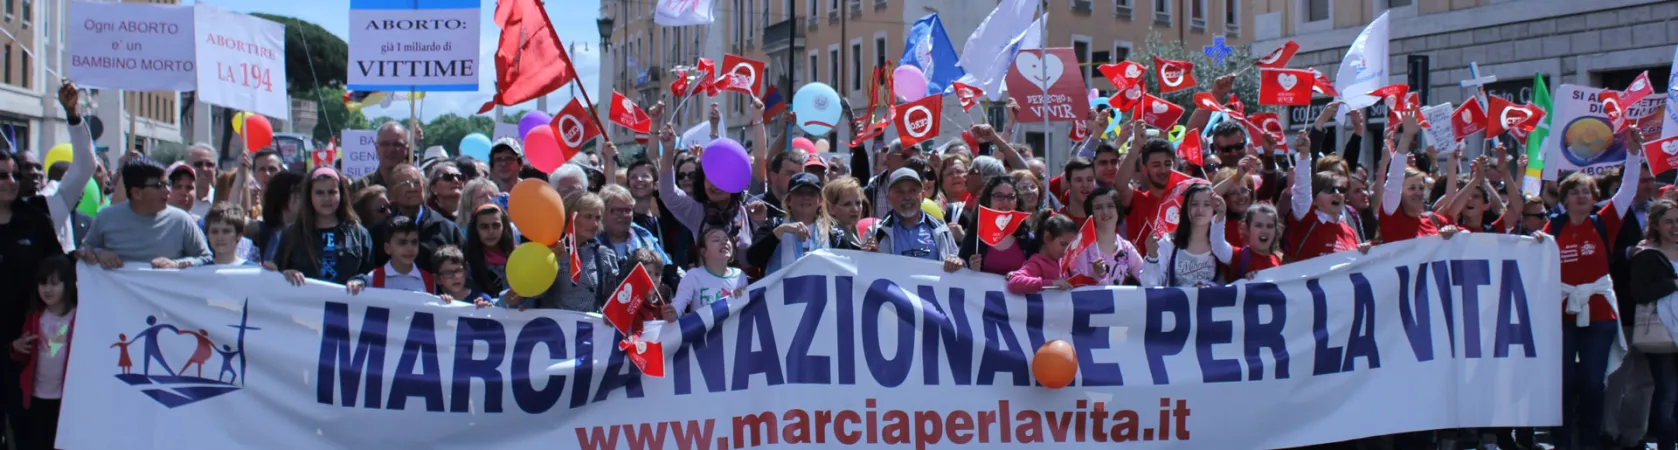 La Marcia per la Vita 2014 | La Marcia per la Vita 2014 | www.marciaperlavita.it